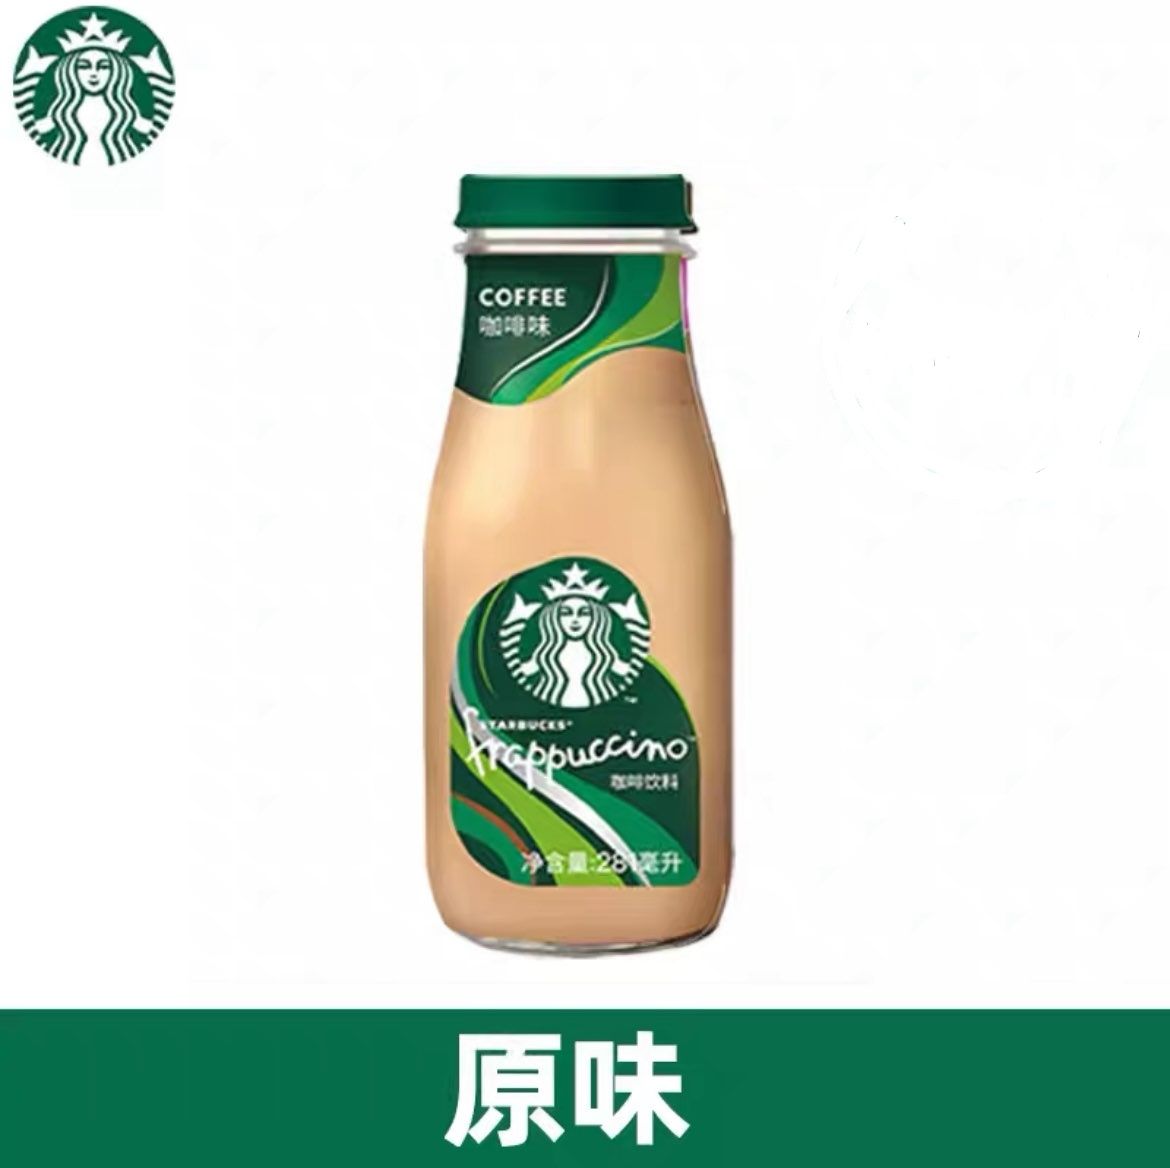 Starbucks Frappuccino coffee drink glass bottled drink 281ml 